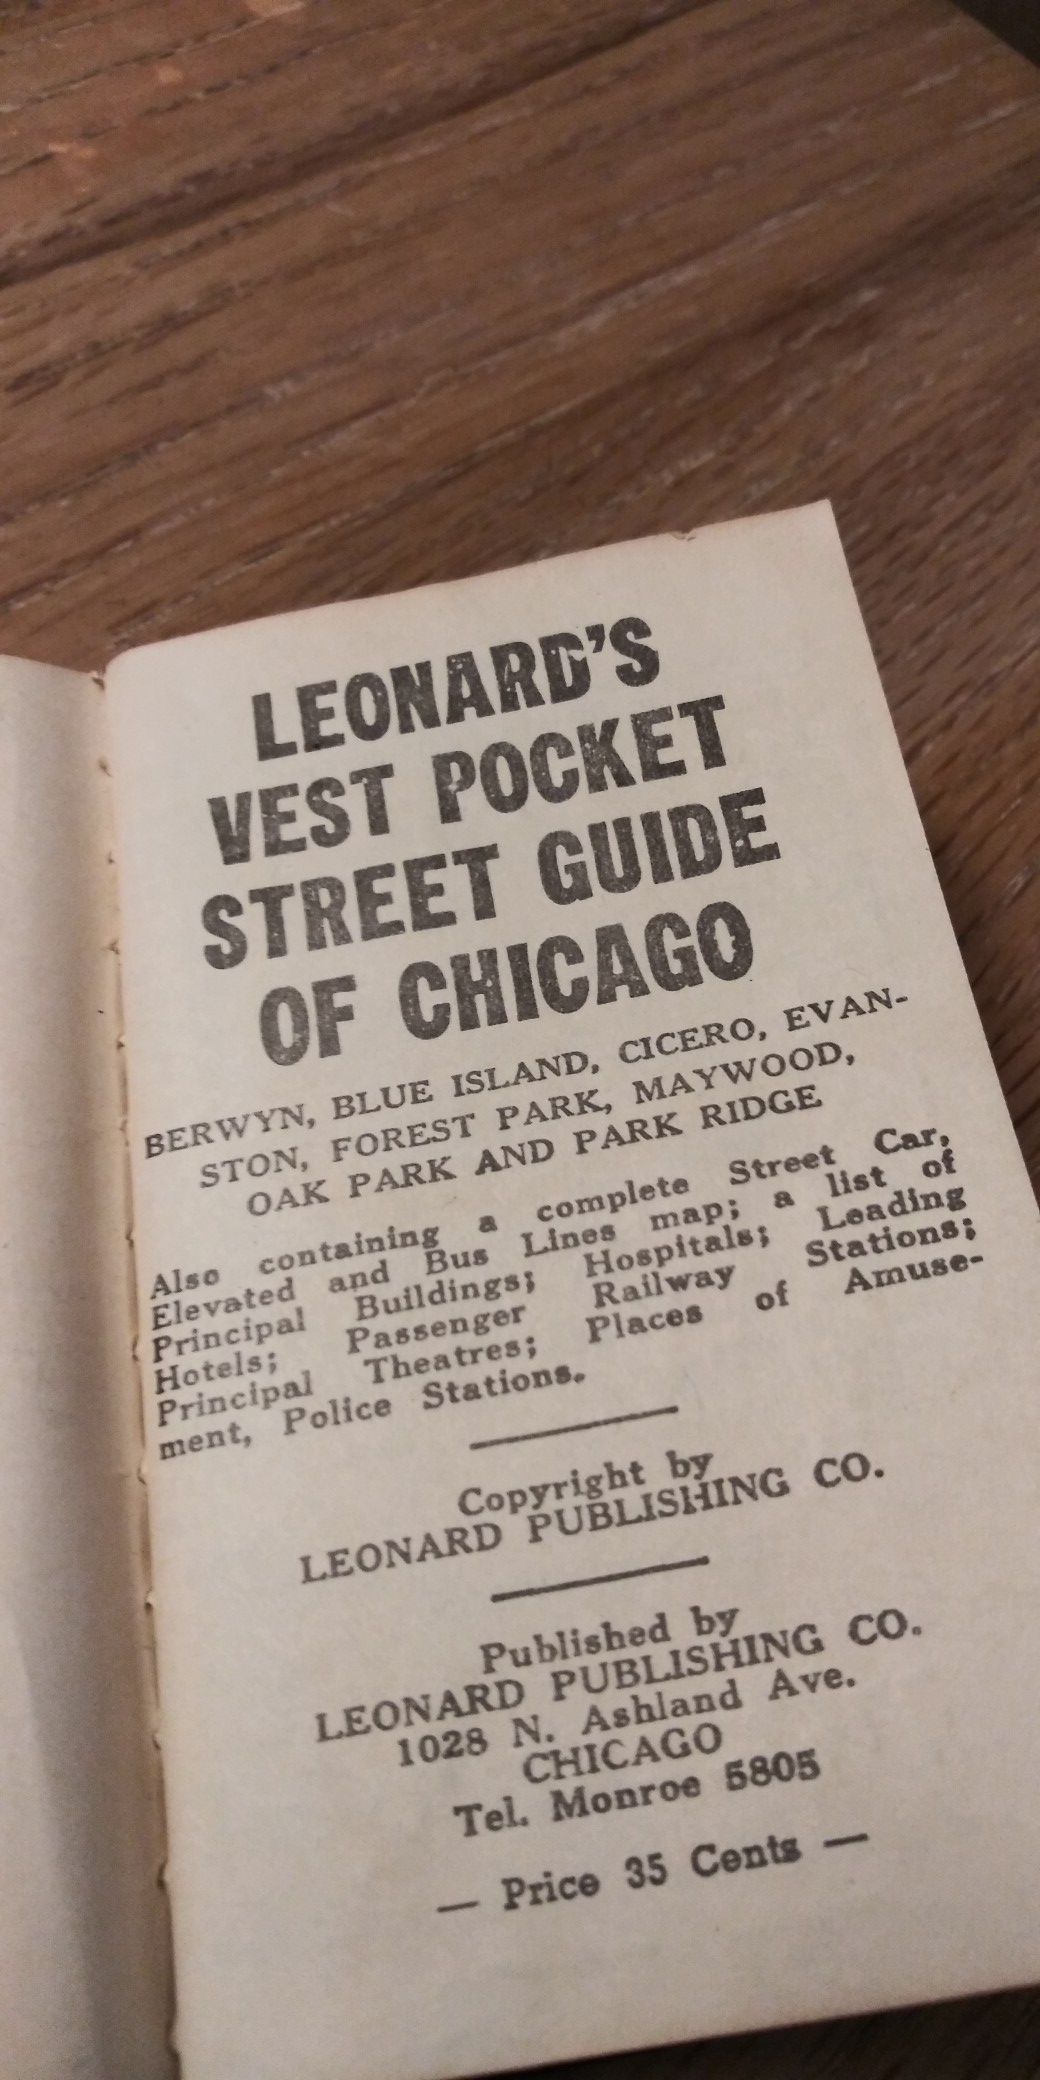 Leonard's vest pocket street guide of Chicago